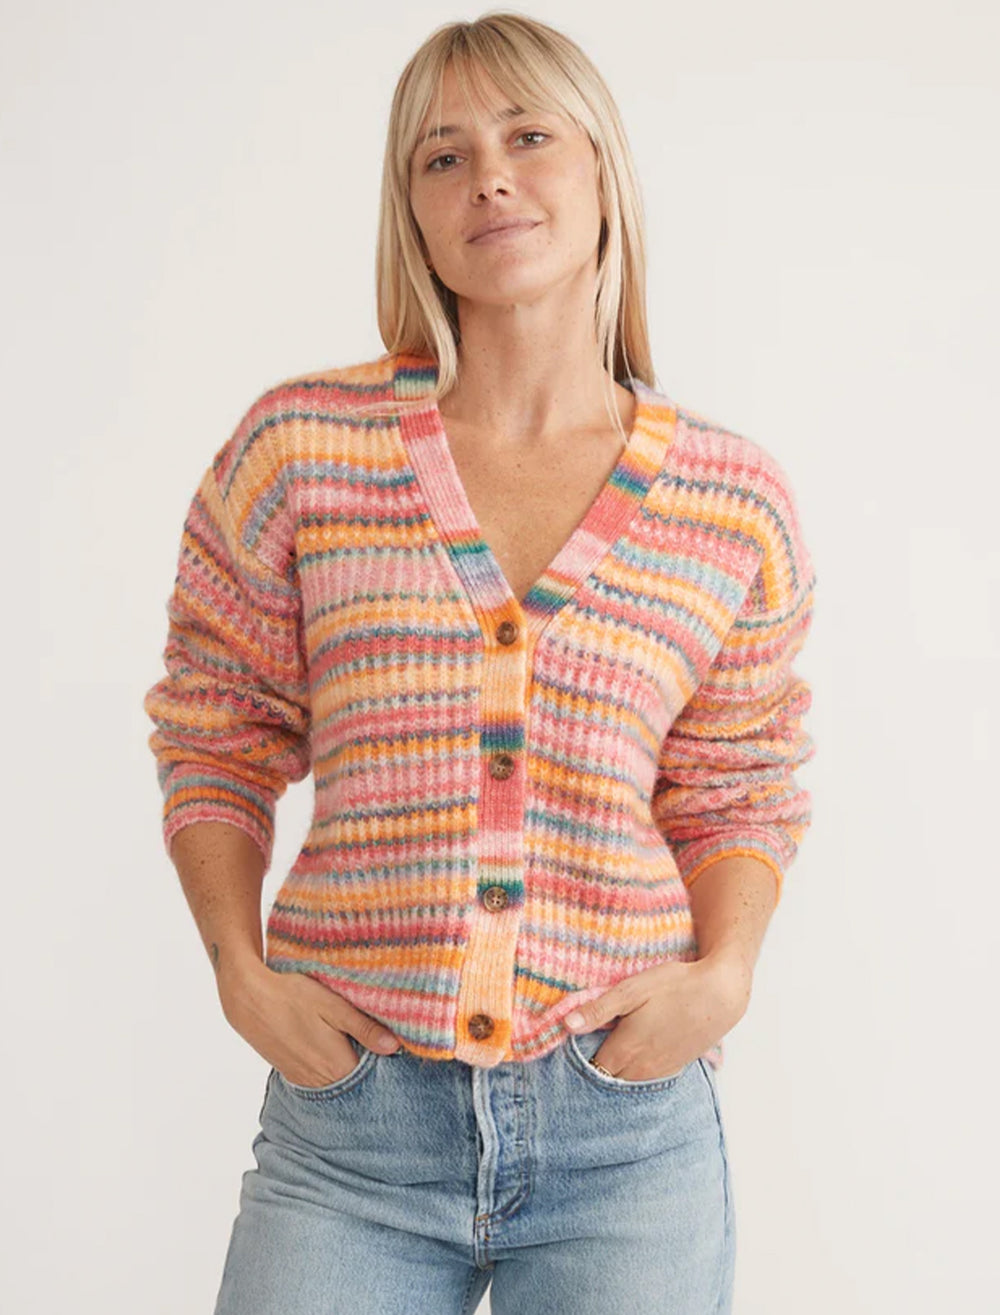 Model wearing Marine Layer's dream yarn cardigan in warm stripe.